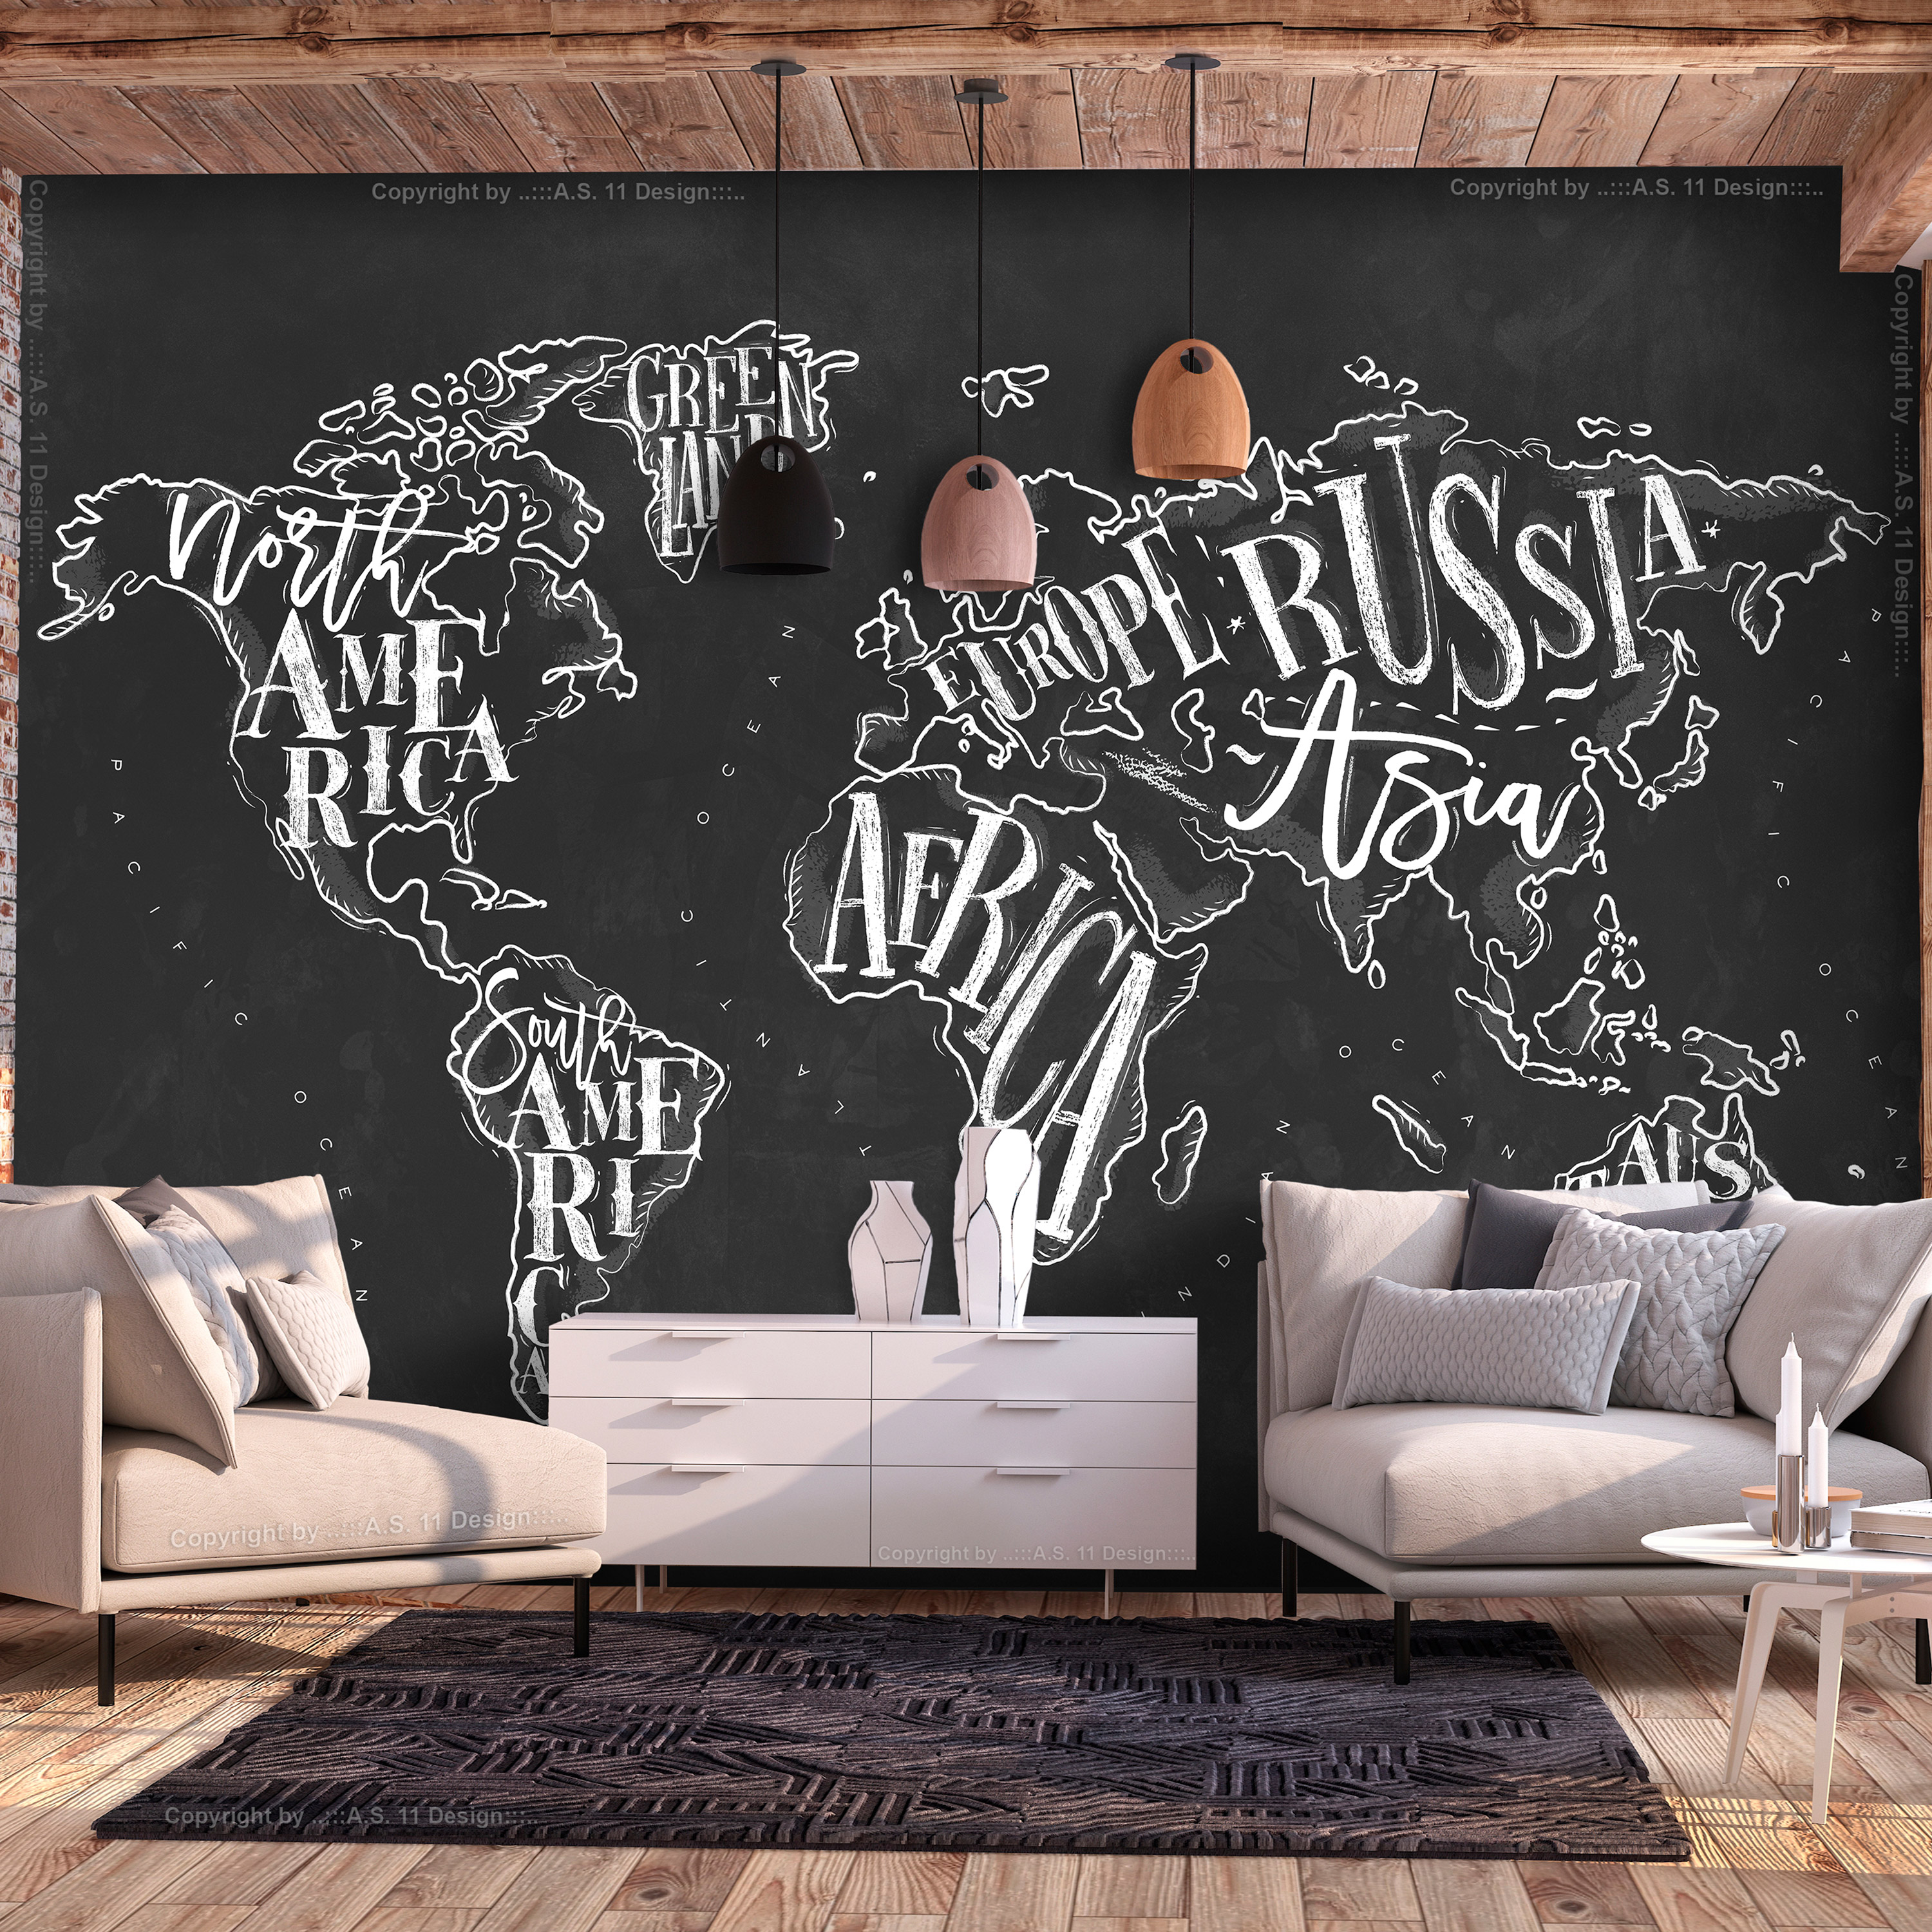 Self-adhesive Wallpaper - Retro Continents (Black) - 196x140